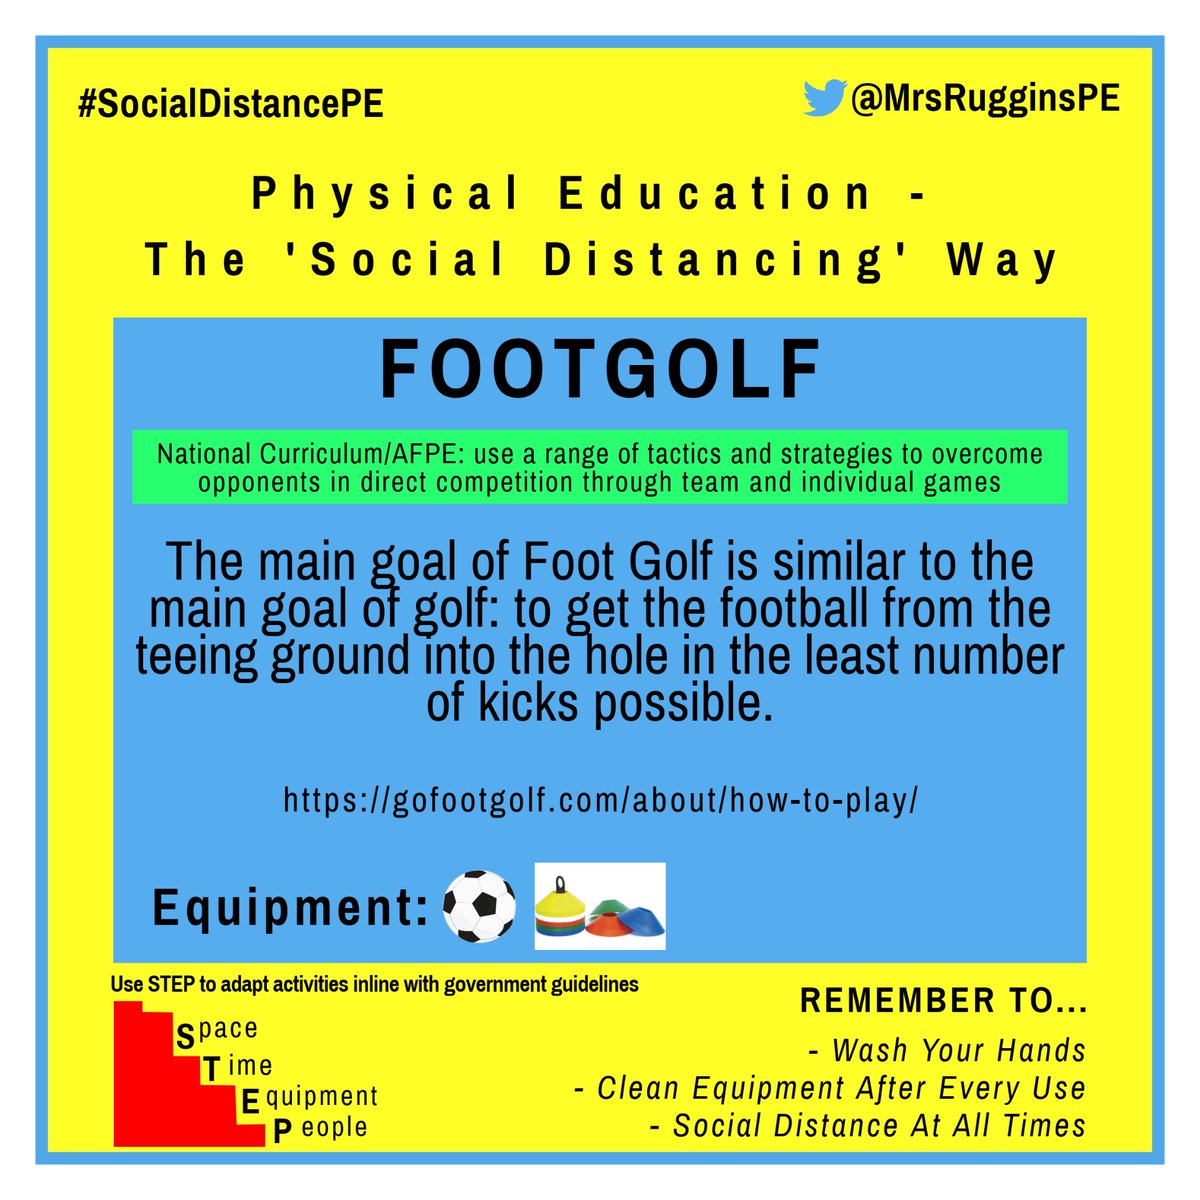 PE - The Social Distancing Way#1 FOOTGOLF #SocialDistancePE  #EDuPE  #Edutwitter